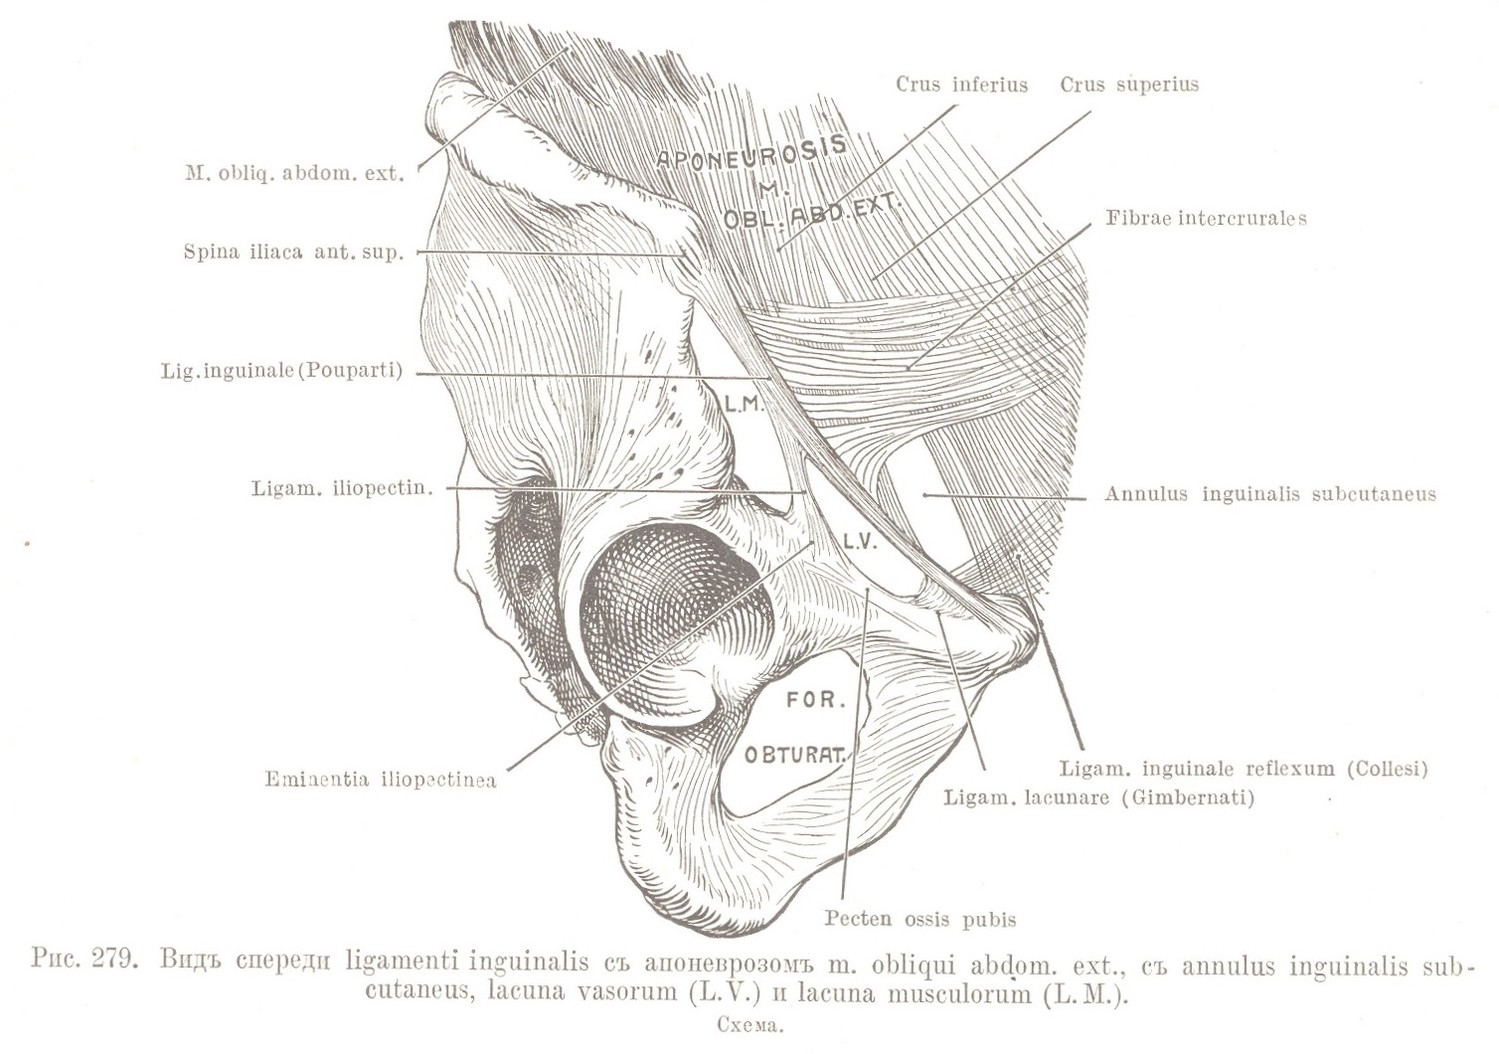 Видъ спереди ligamenti inguinalis съ апоневрозомъ m. obliqui abdom. ext., съ annulus inguinalis subcutaneus, lacuna vasorum (L.V.) и lacuna musculorum (L. M.).